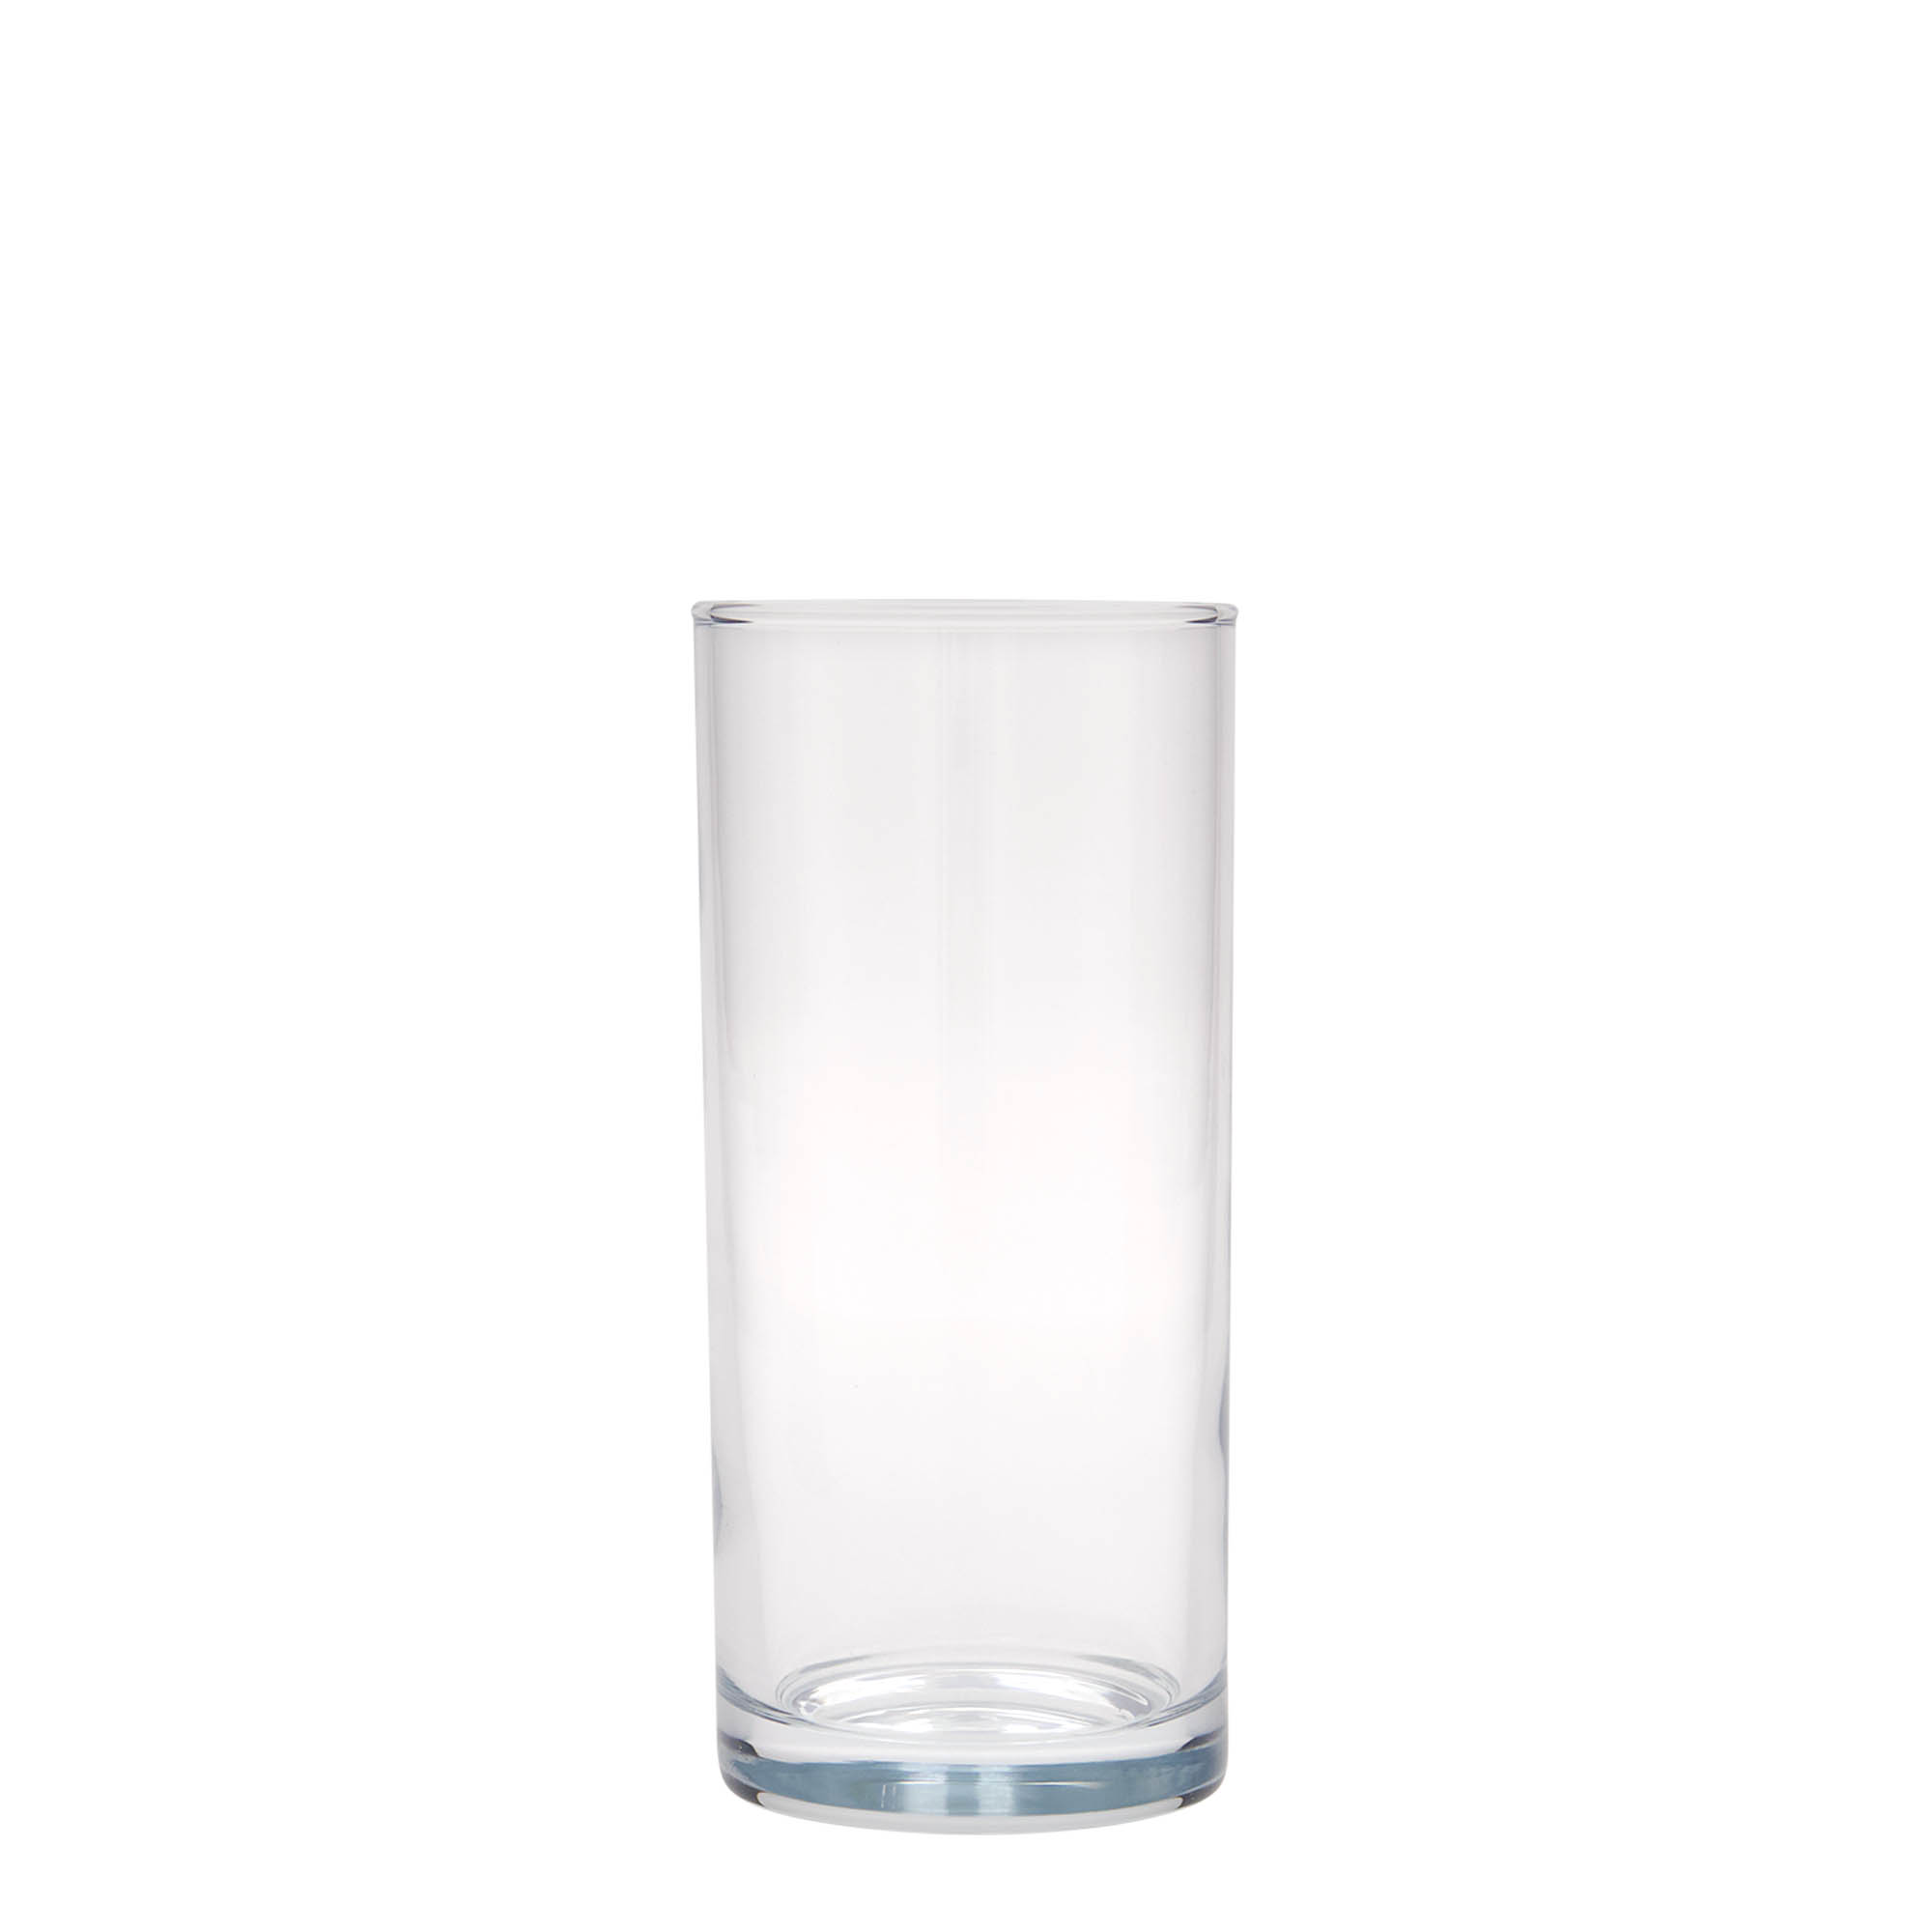 200 ml highball glass 'Amsterdam', glass